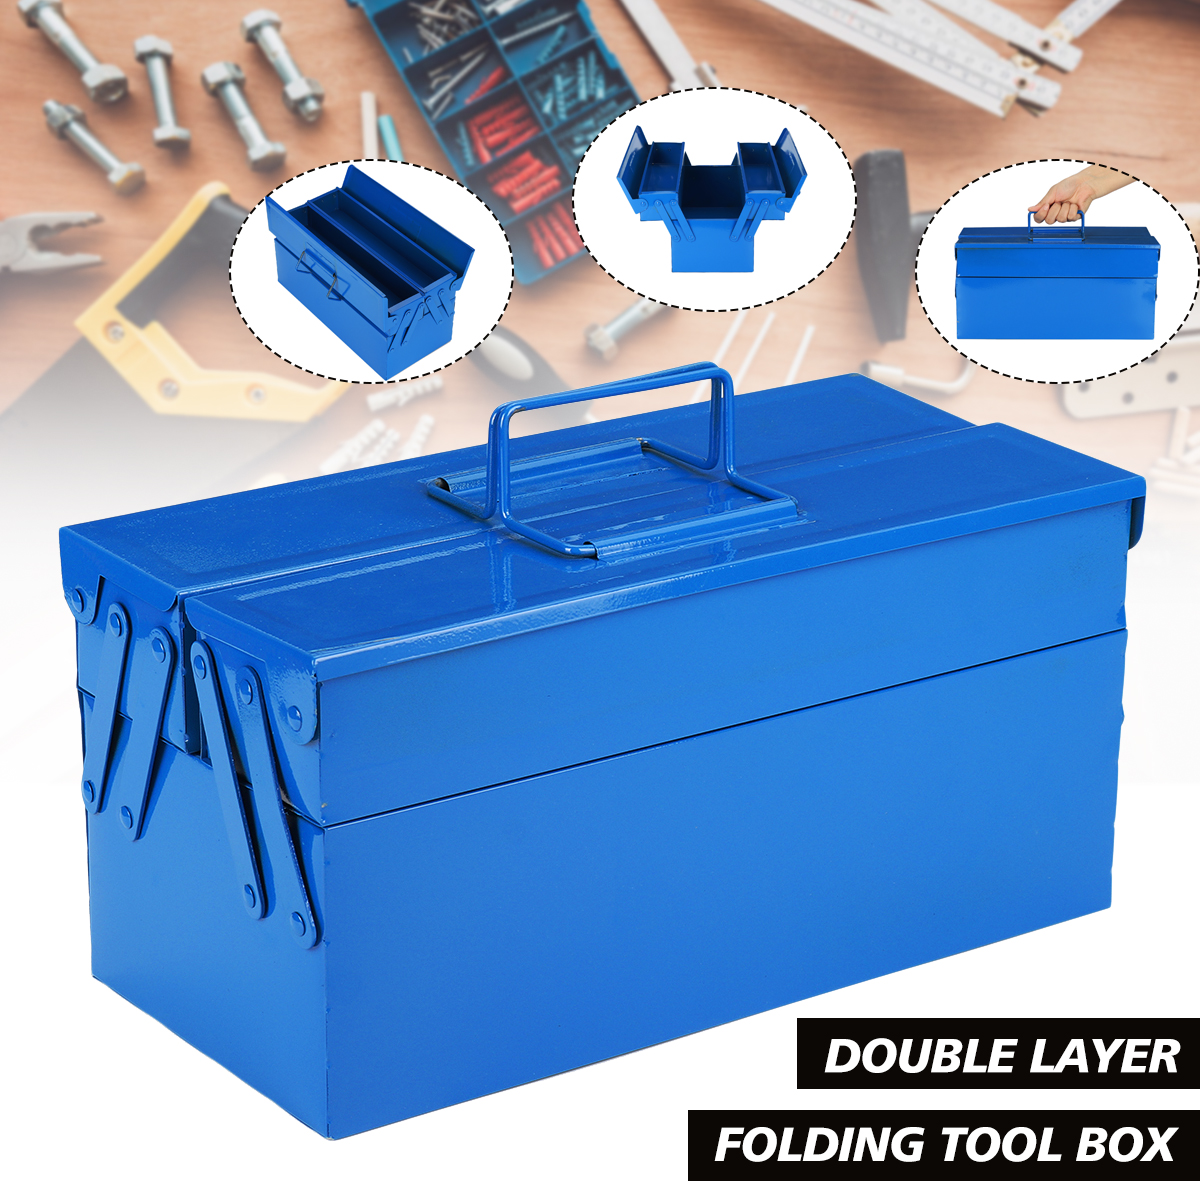 1PCS-Blue-Double-layer-Iron-Toolbox-Double-layer-Iron-Toolbox-Portable-Folding-Toolbox-Household-Sto-1900889-13